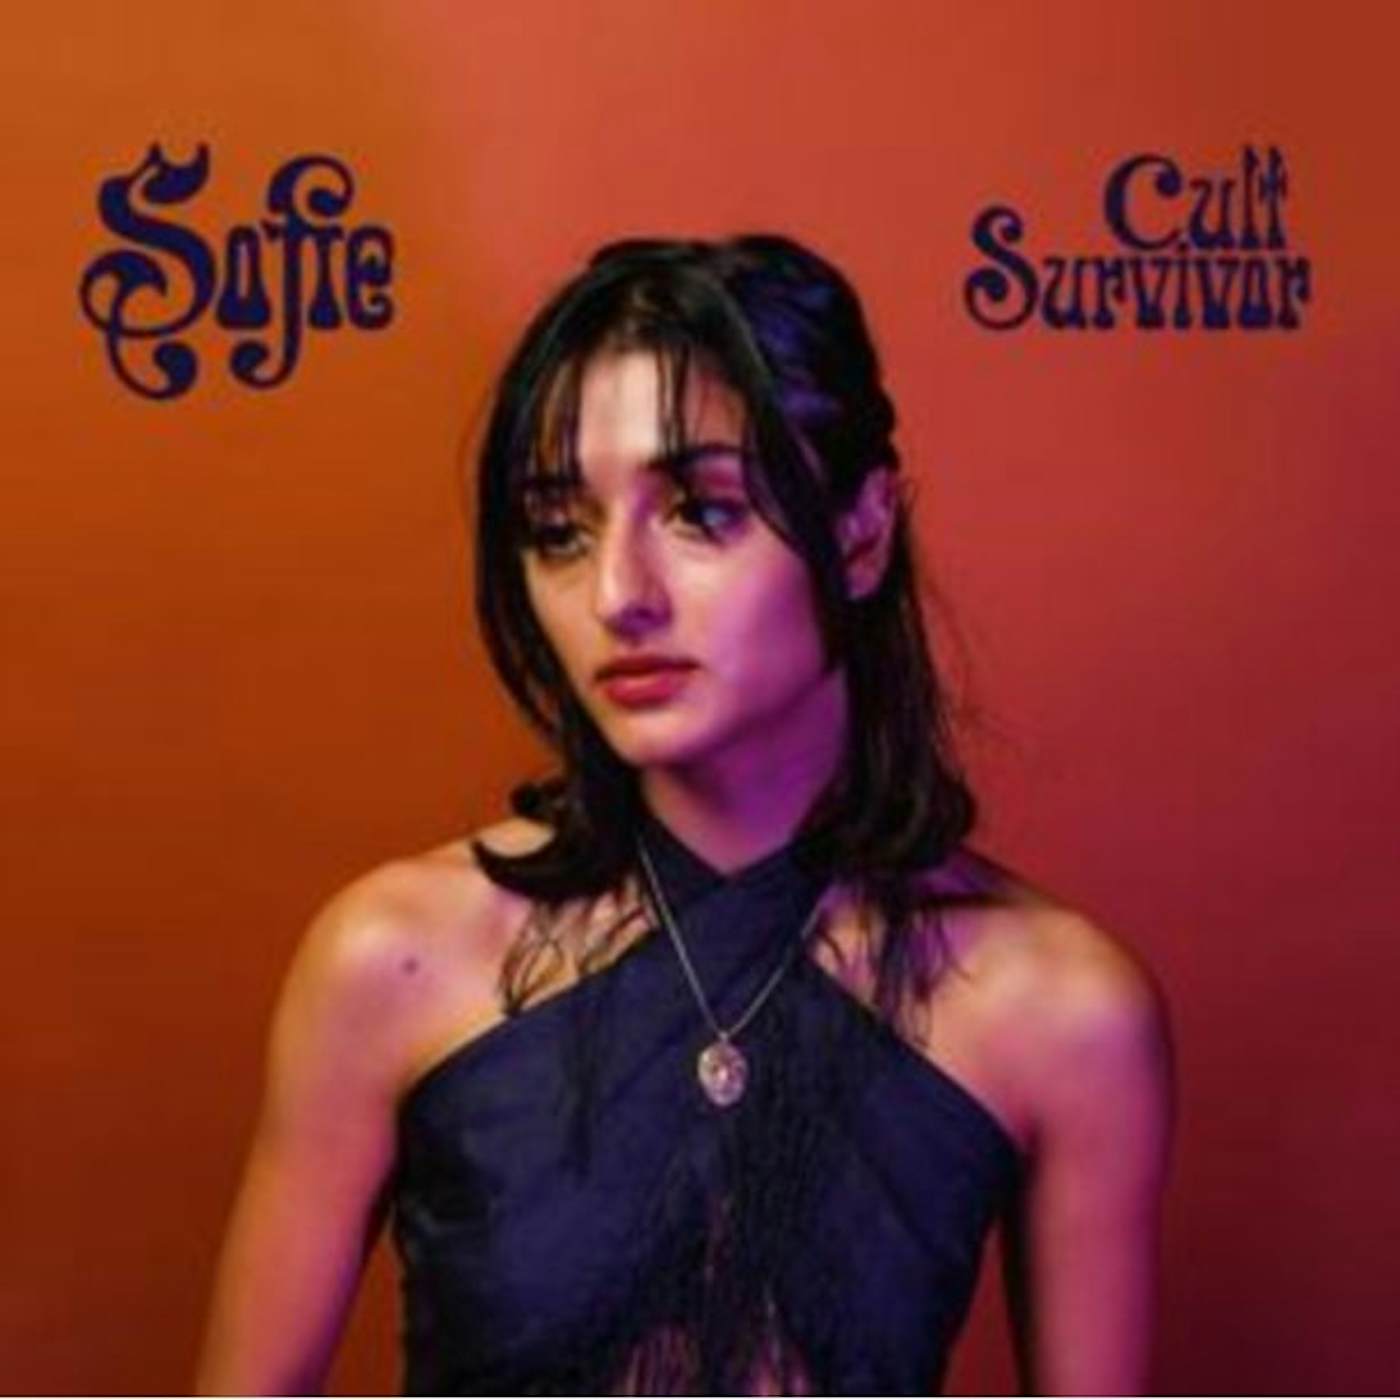 Sofie Cult Survivor Vinyl Record